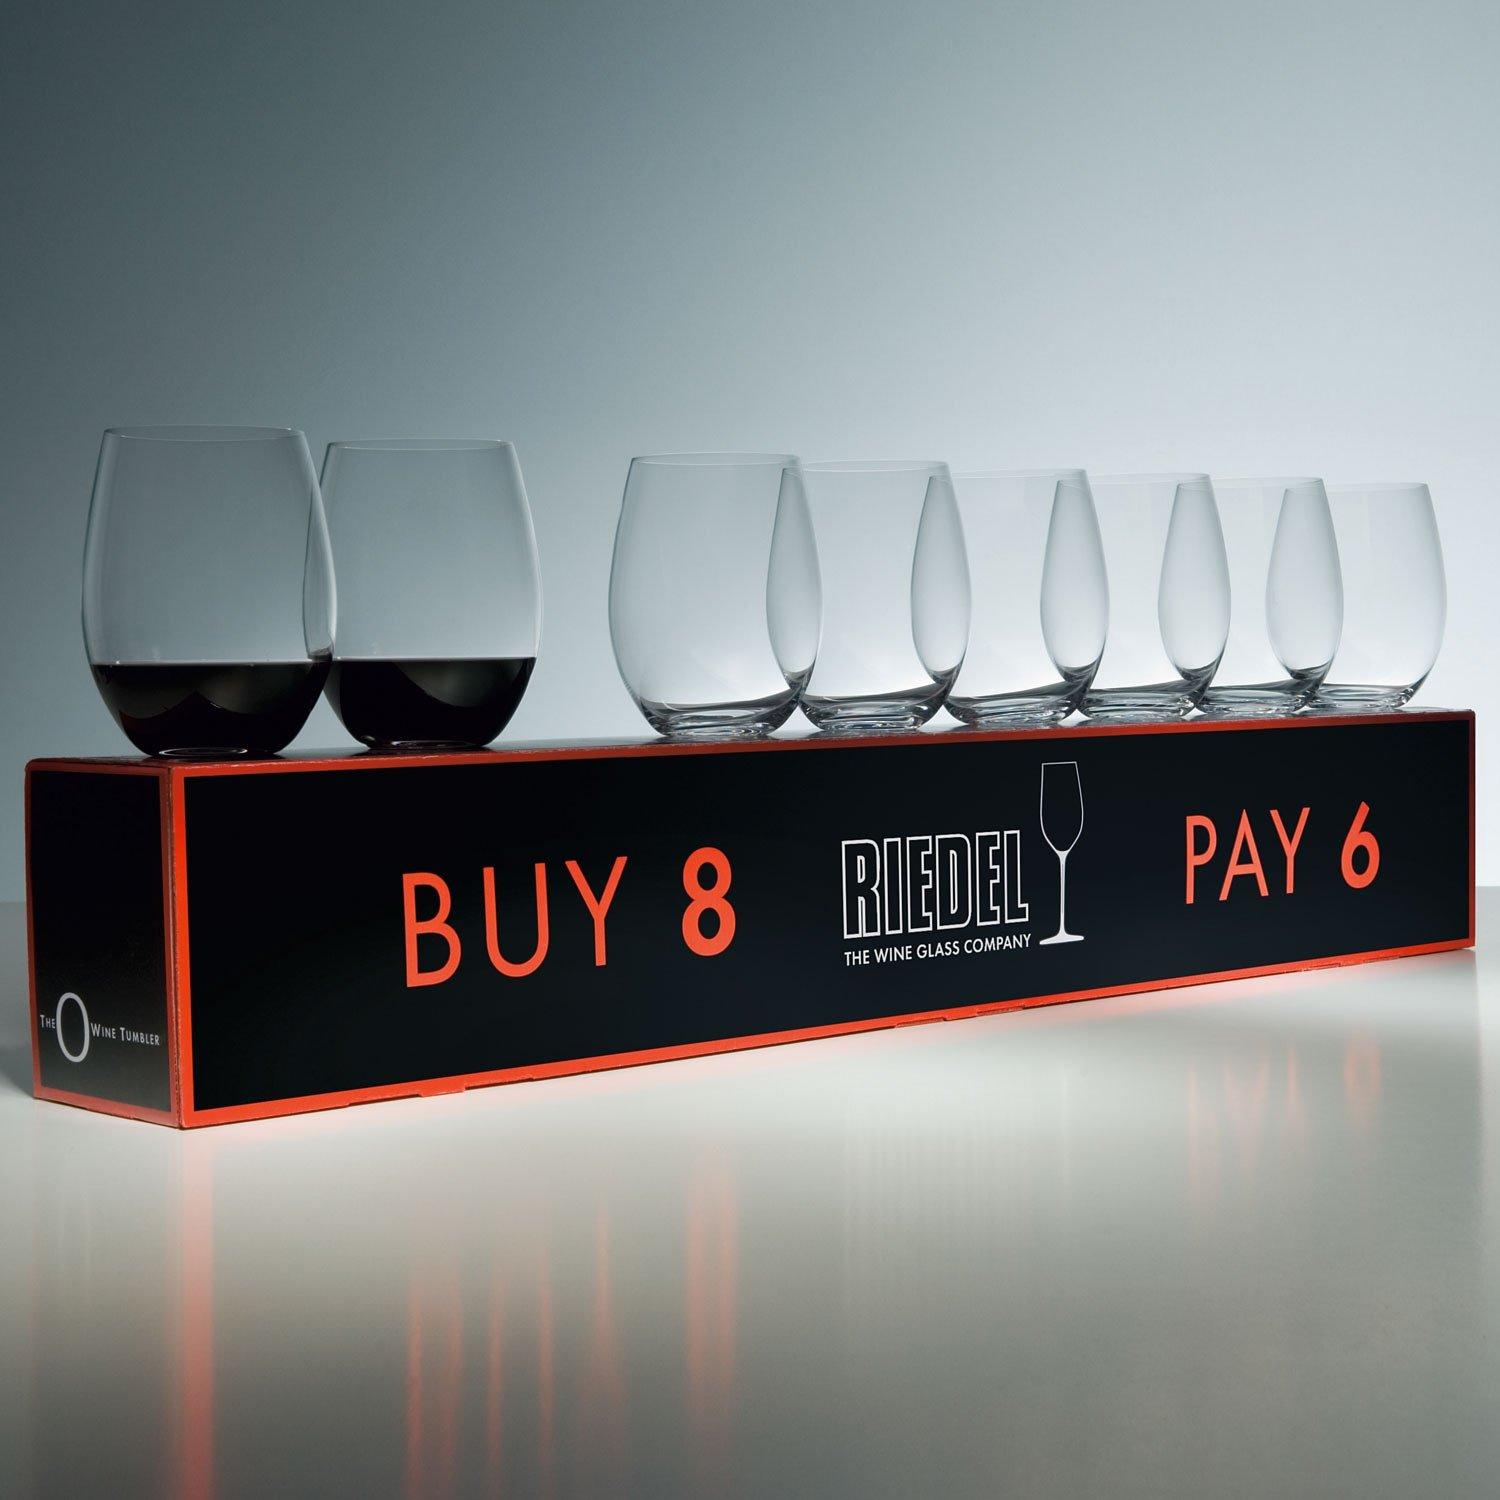 Wine Enthusiast Break-Free PolyCarb Pinot Noir Wine Glasses (Set